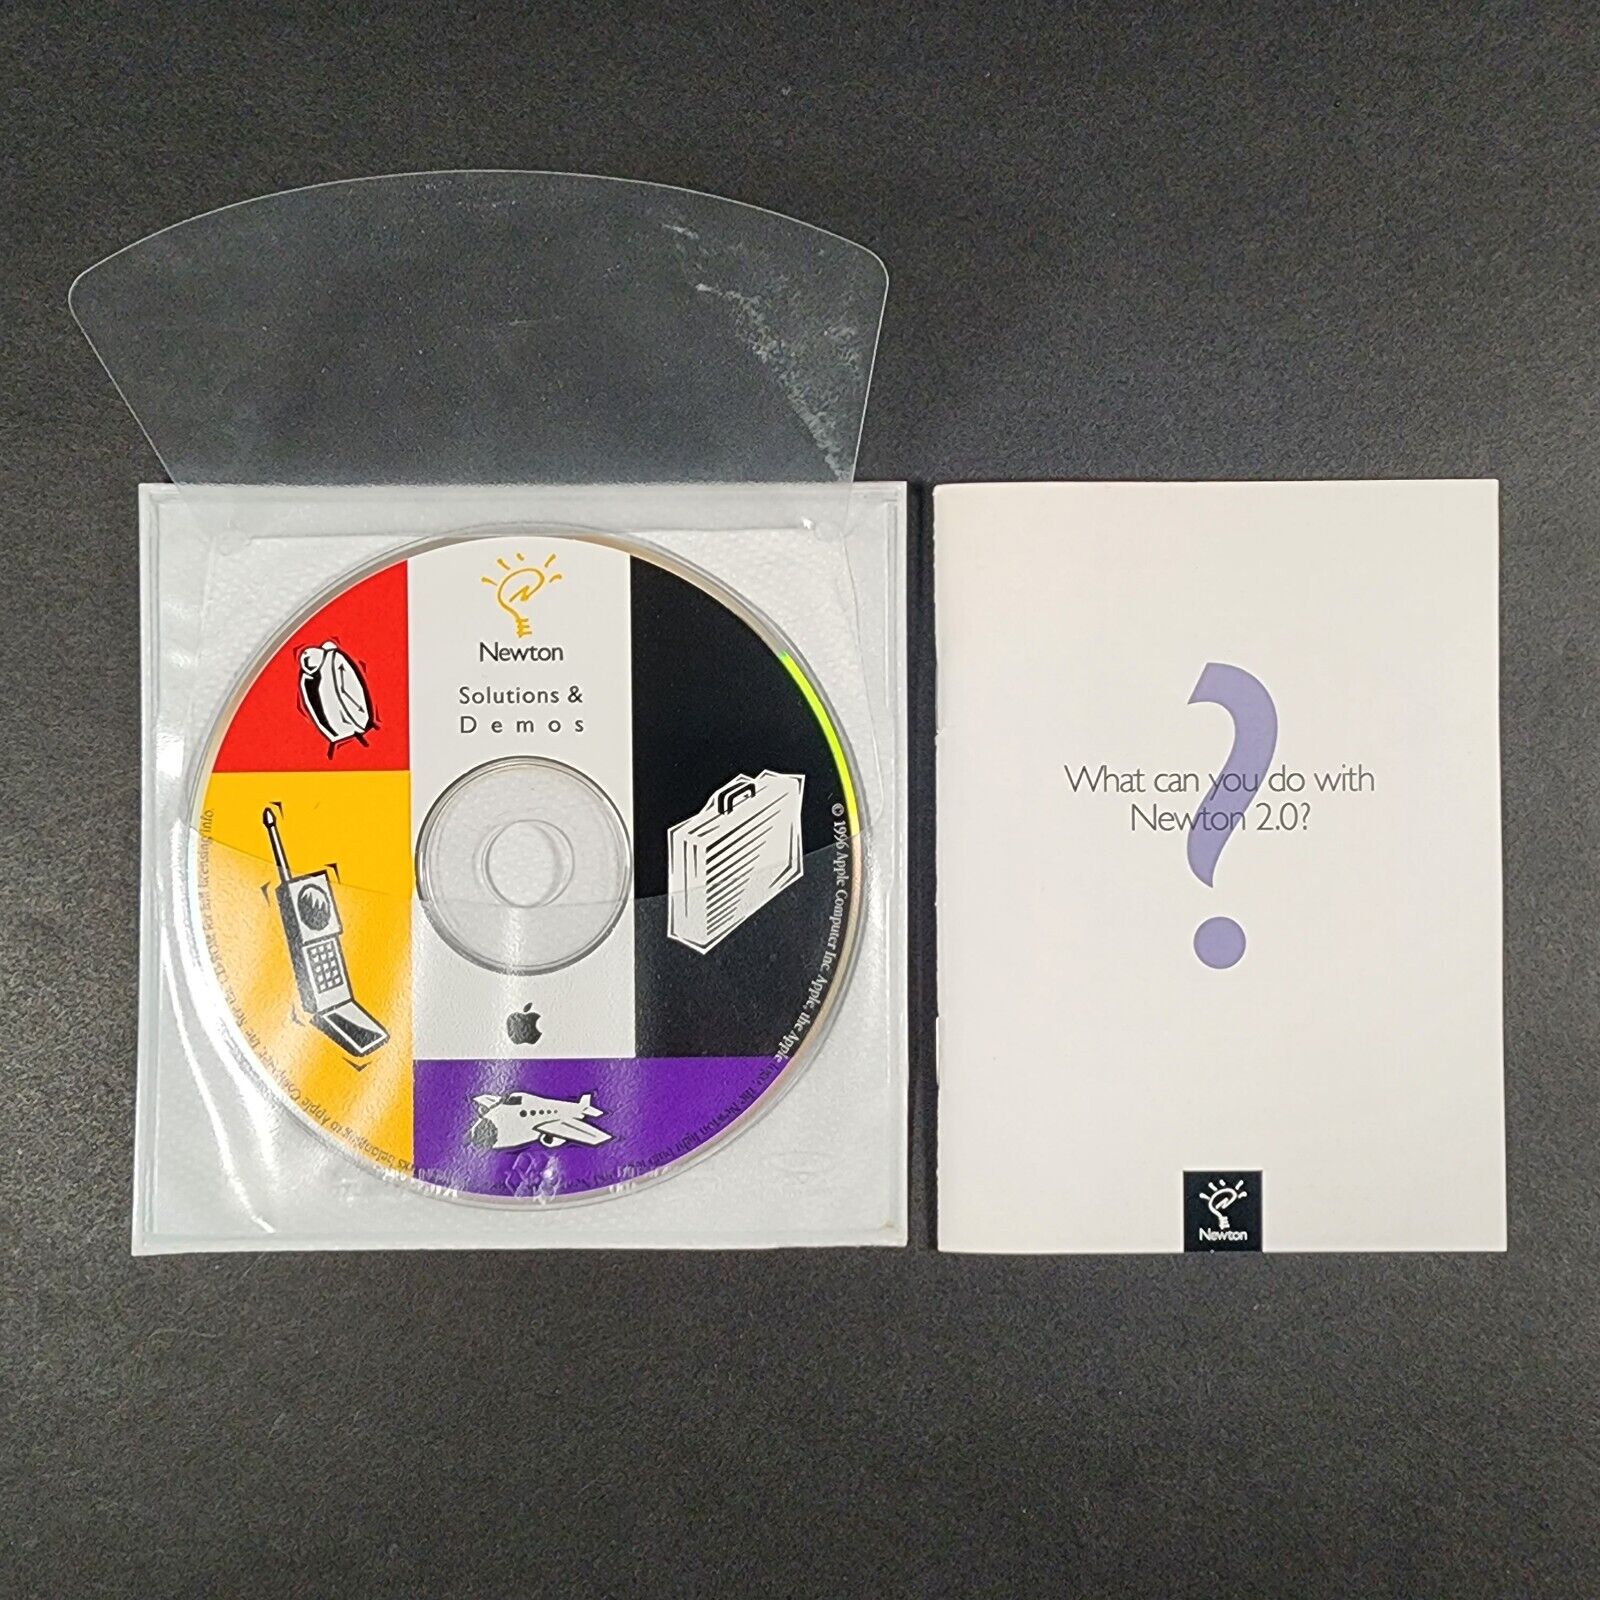 Apple Newton Solutions & Demos CD & Info Booklet - Very Rare - Newton 2.0 - 1996